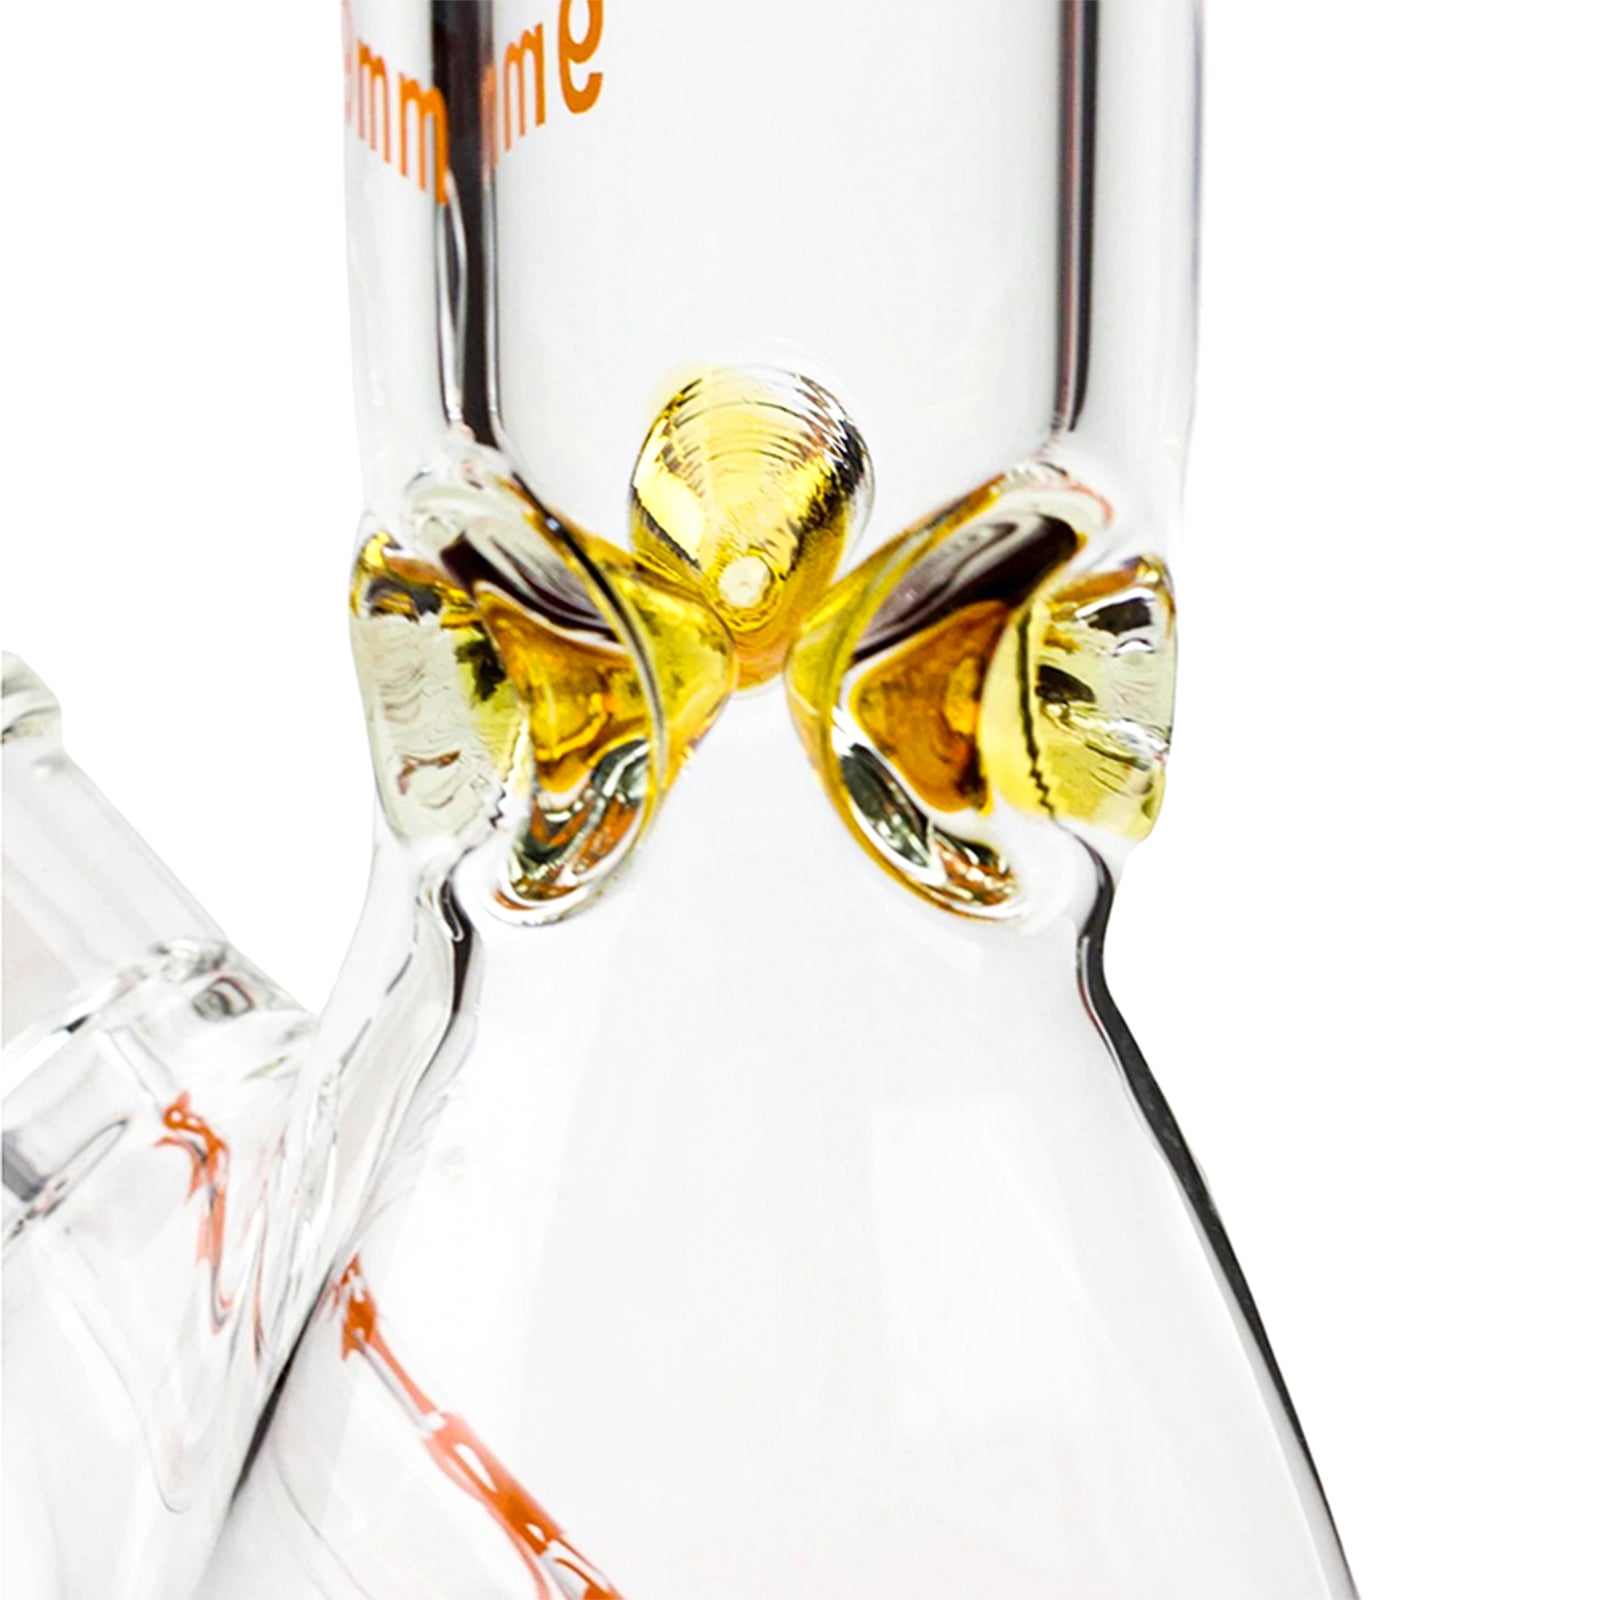 14-Inch XTREME Glass Beaker Bong - INHALCO